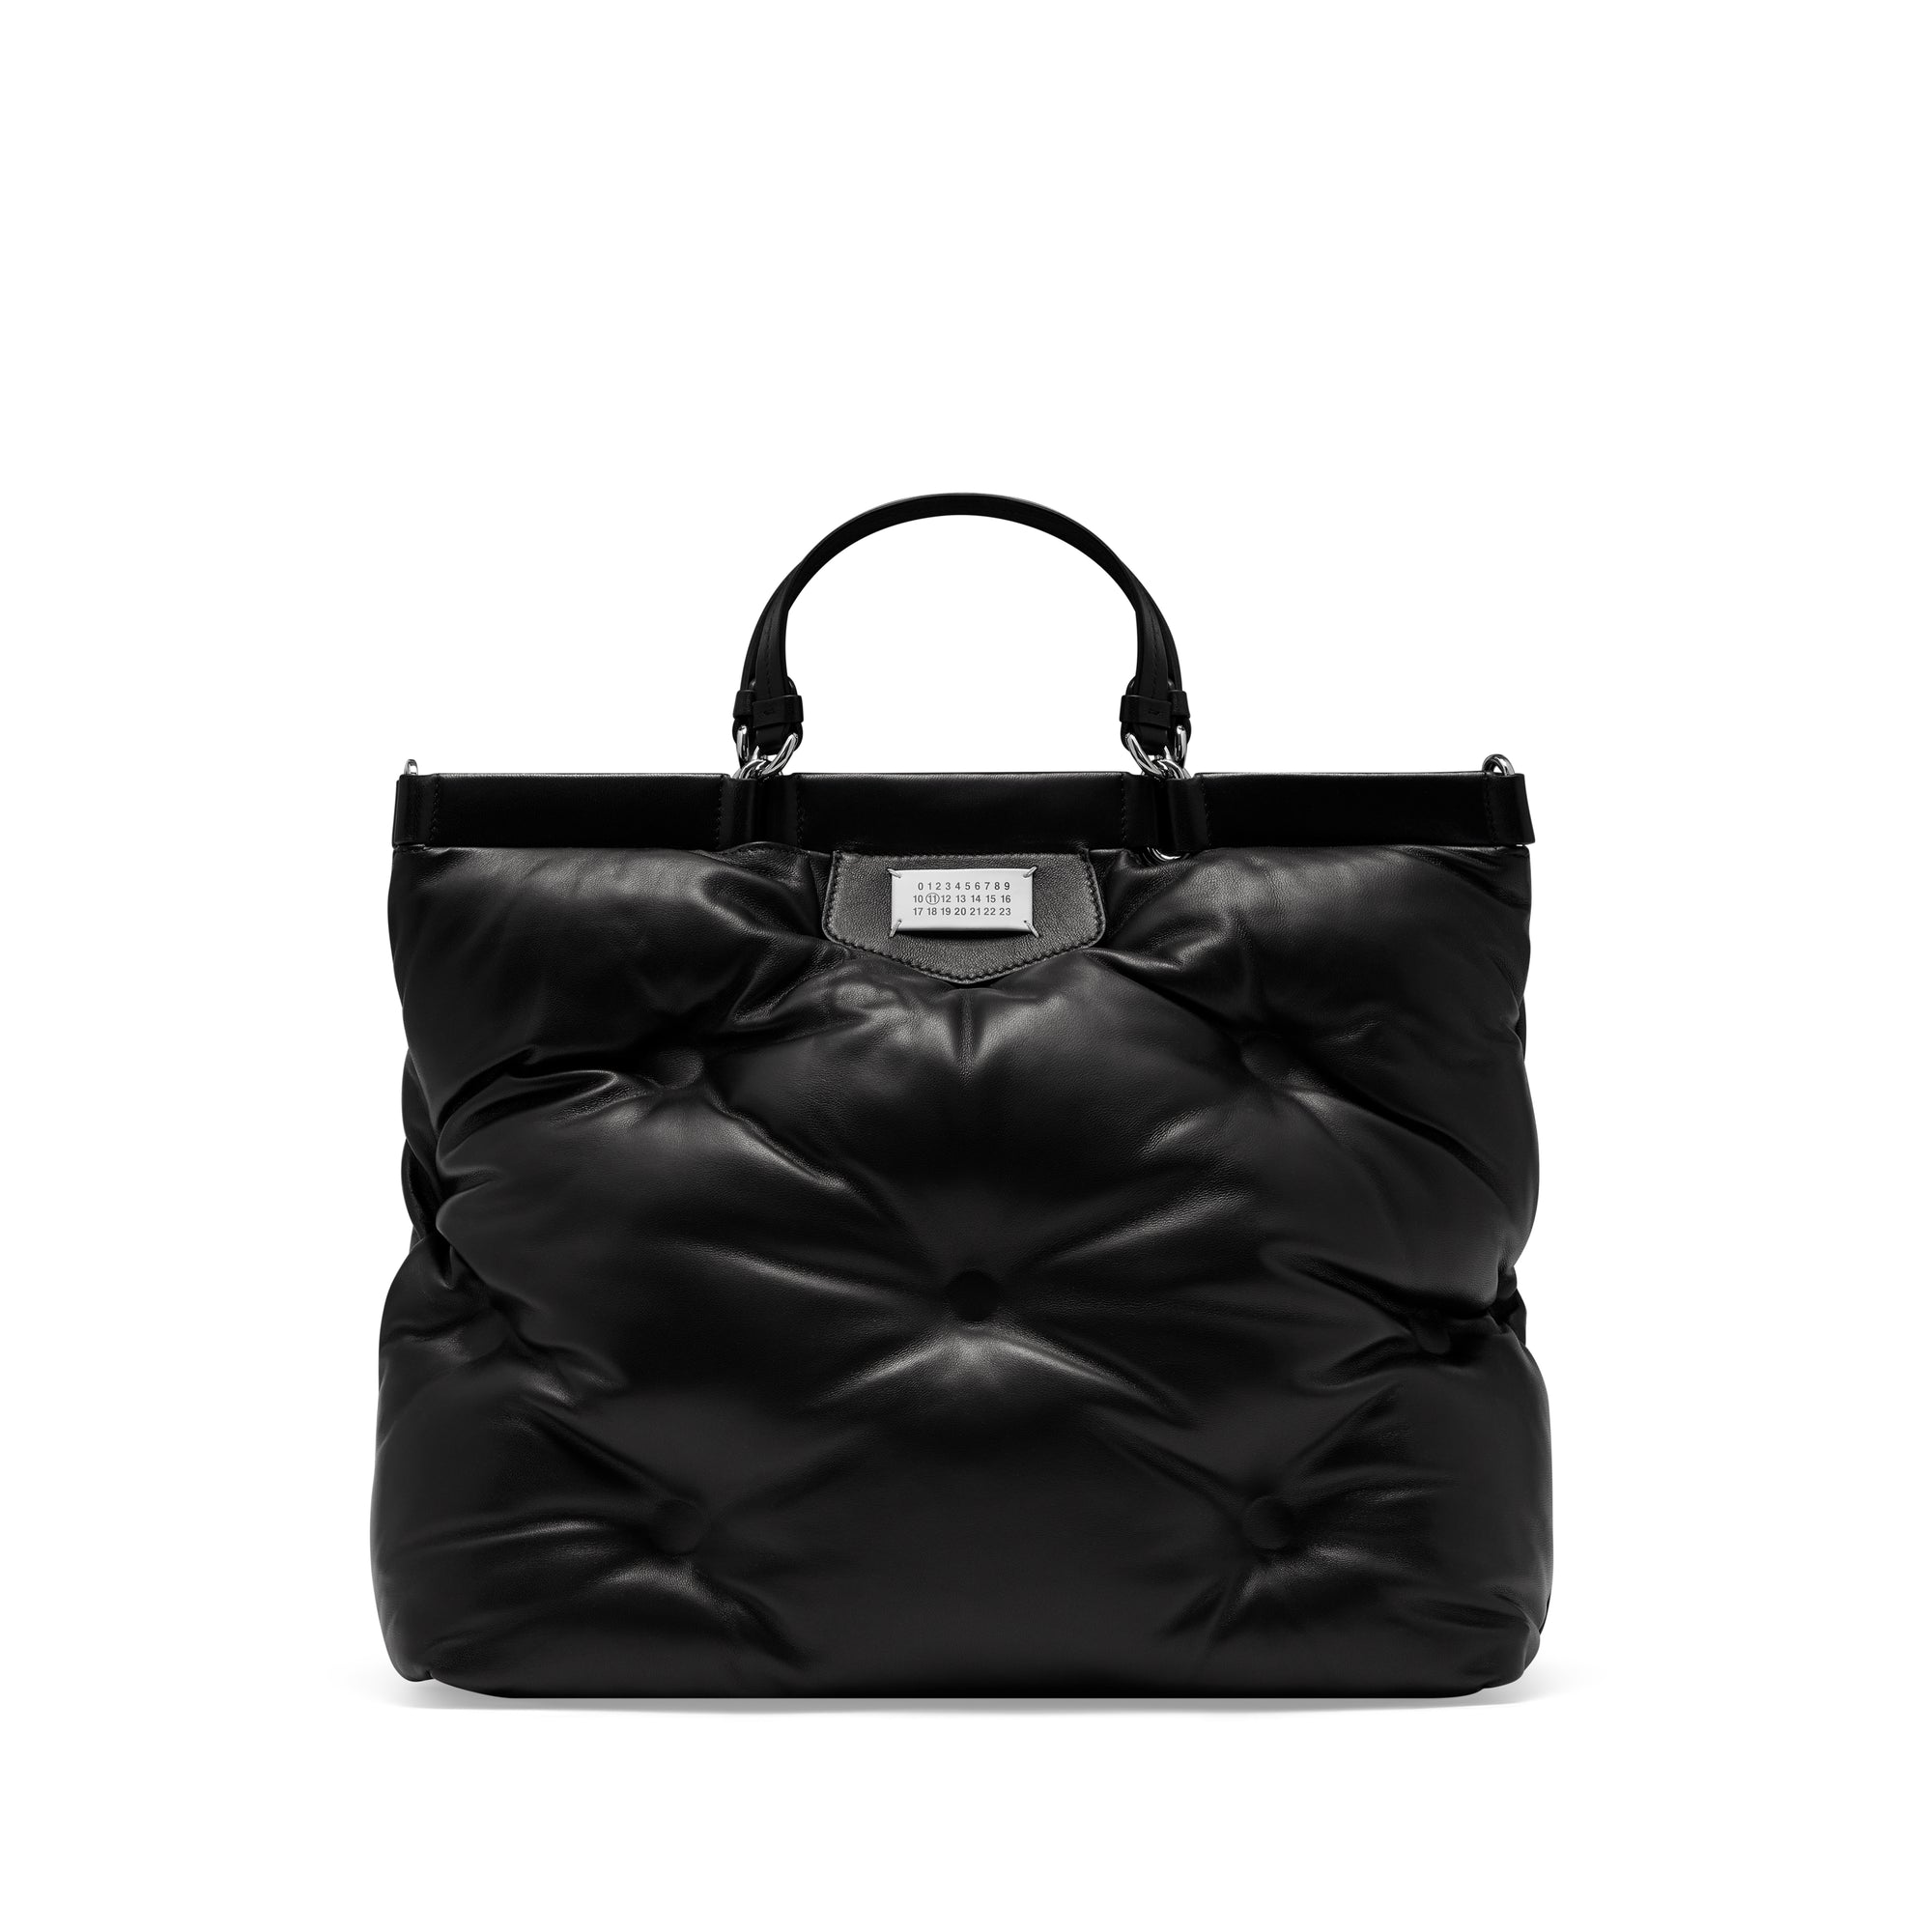 Maison Margiela - Women’s Glam Slam Shopping Large Bag - (Black) view 1